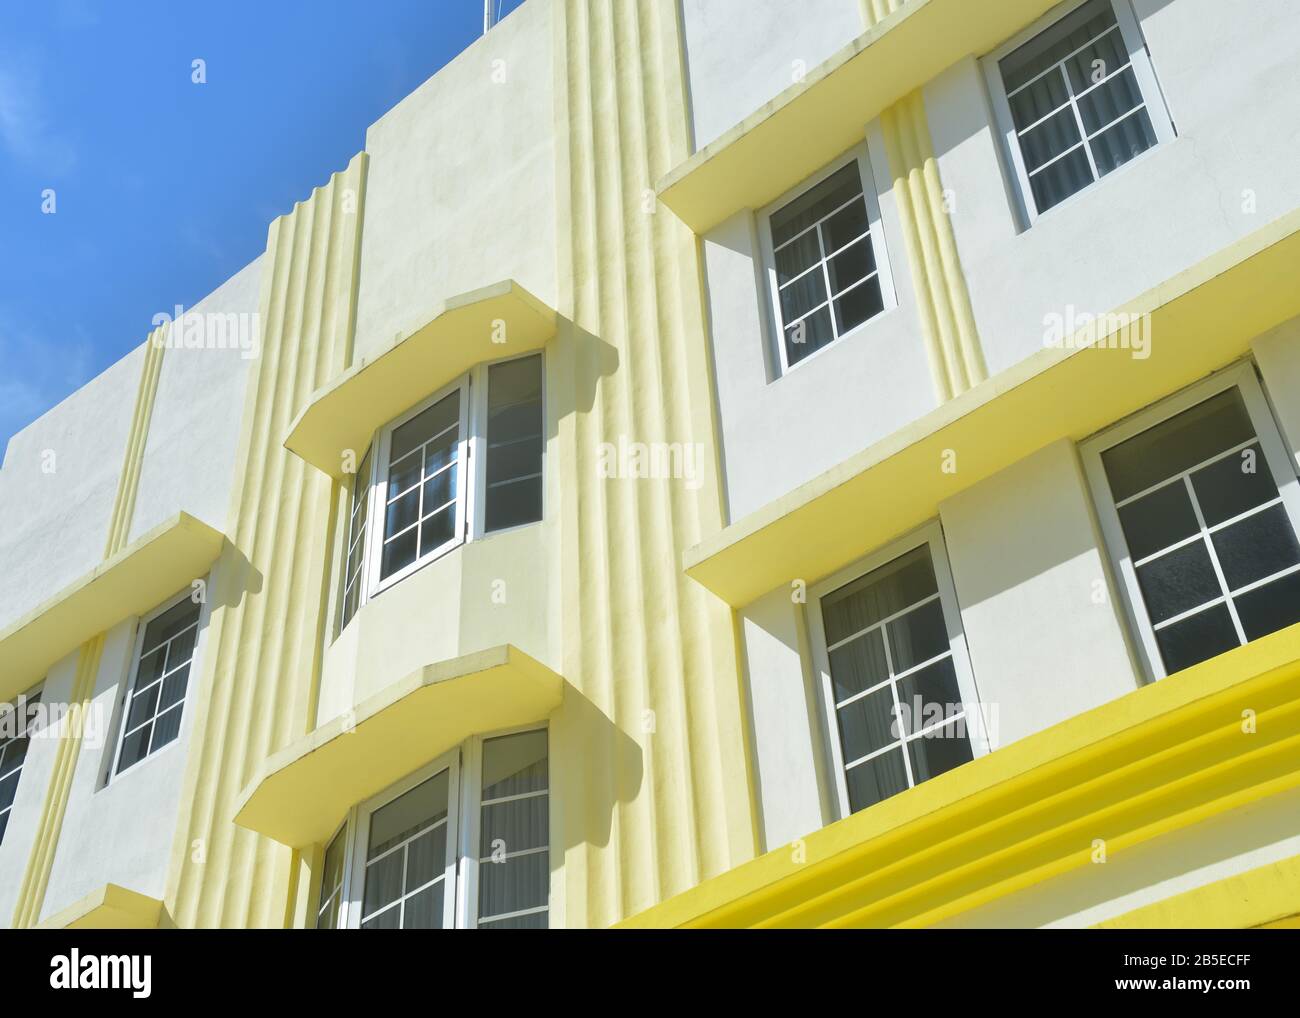 Miami Art Deco Architecture. Yellow and White Building Facade, Detail